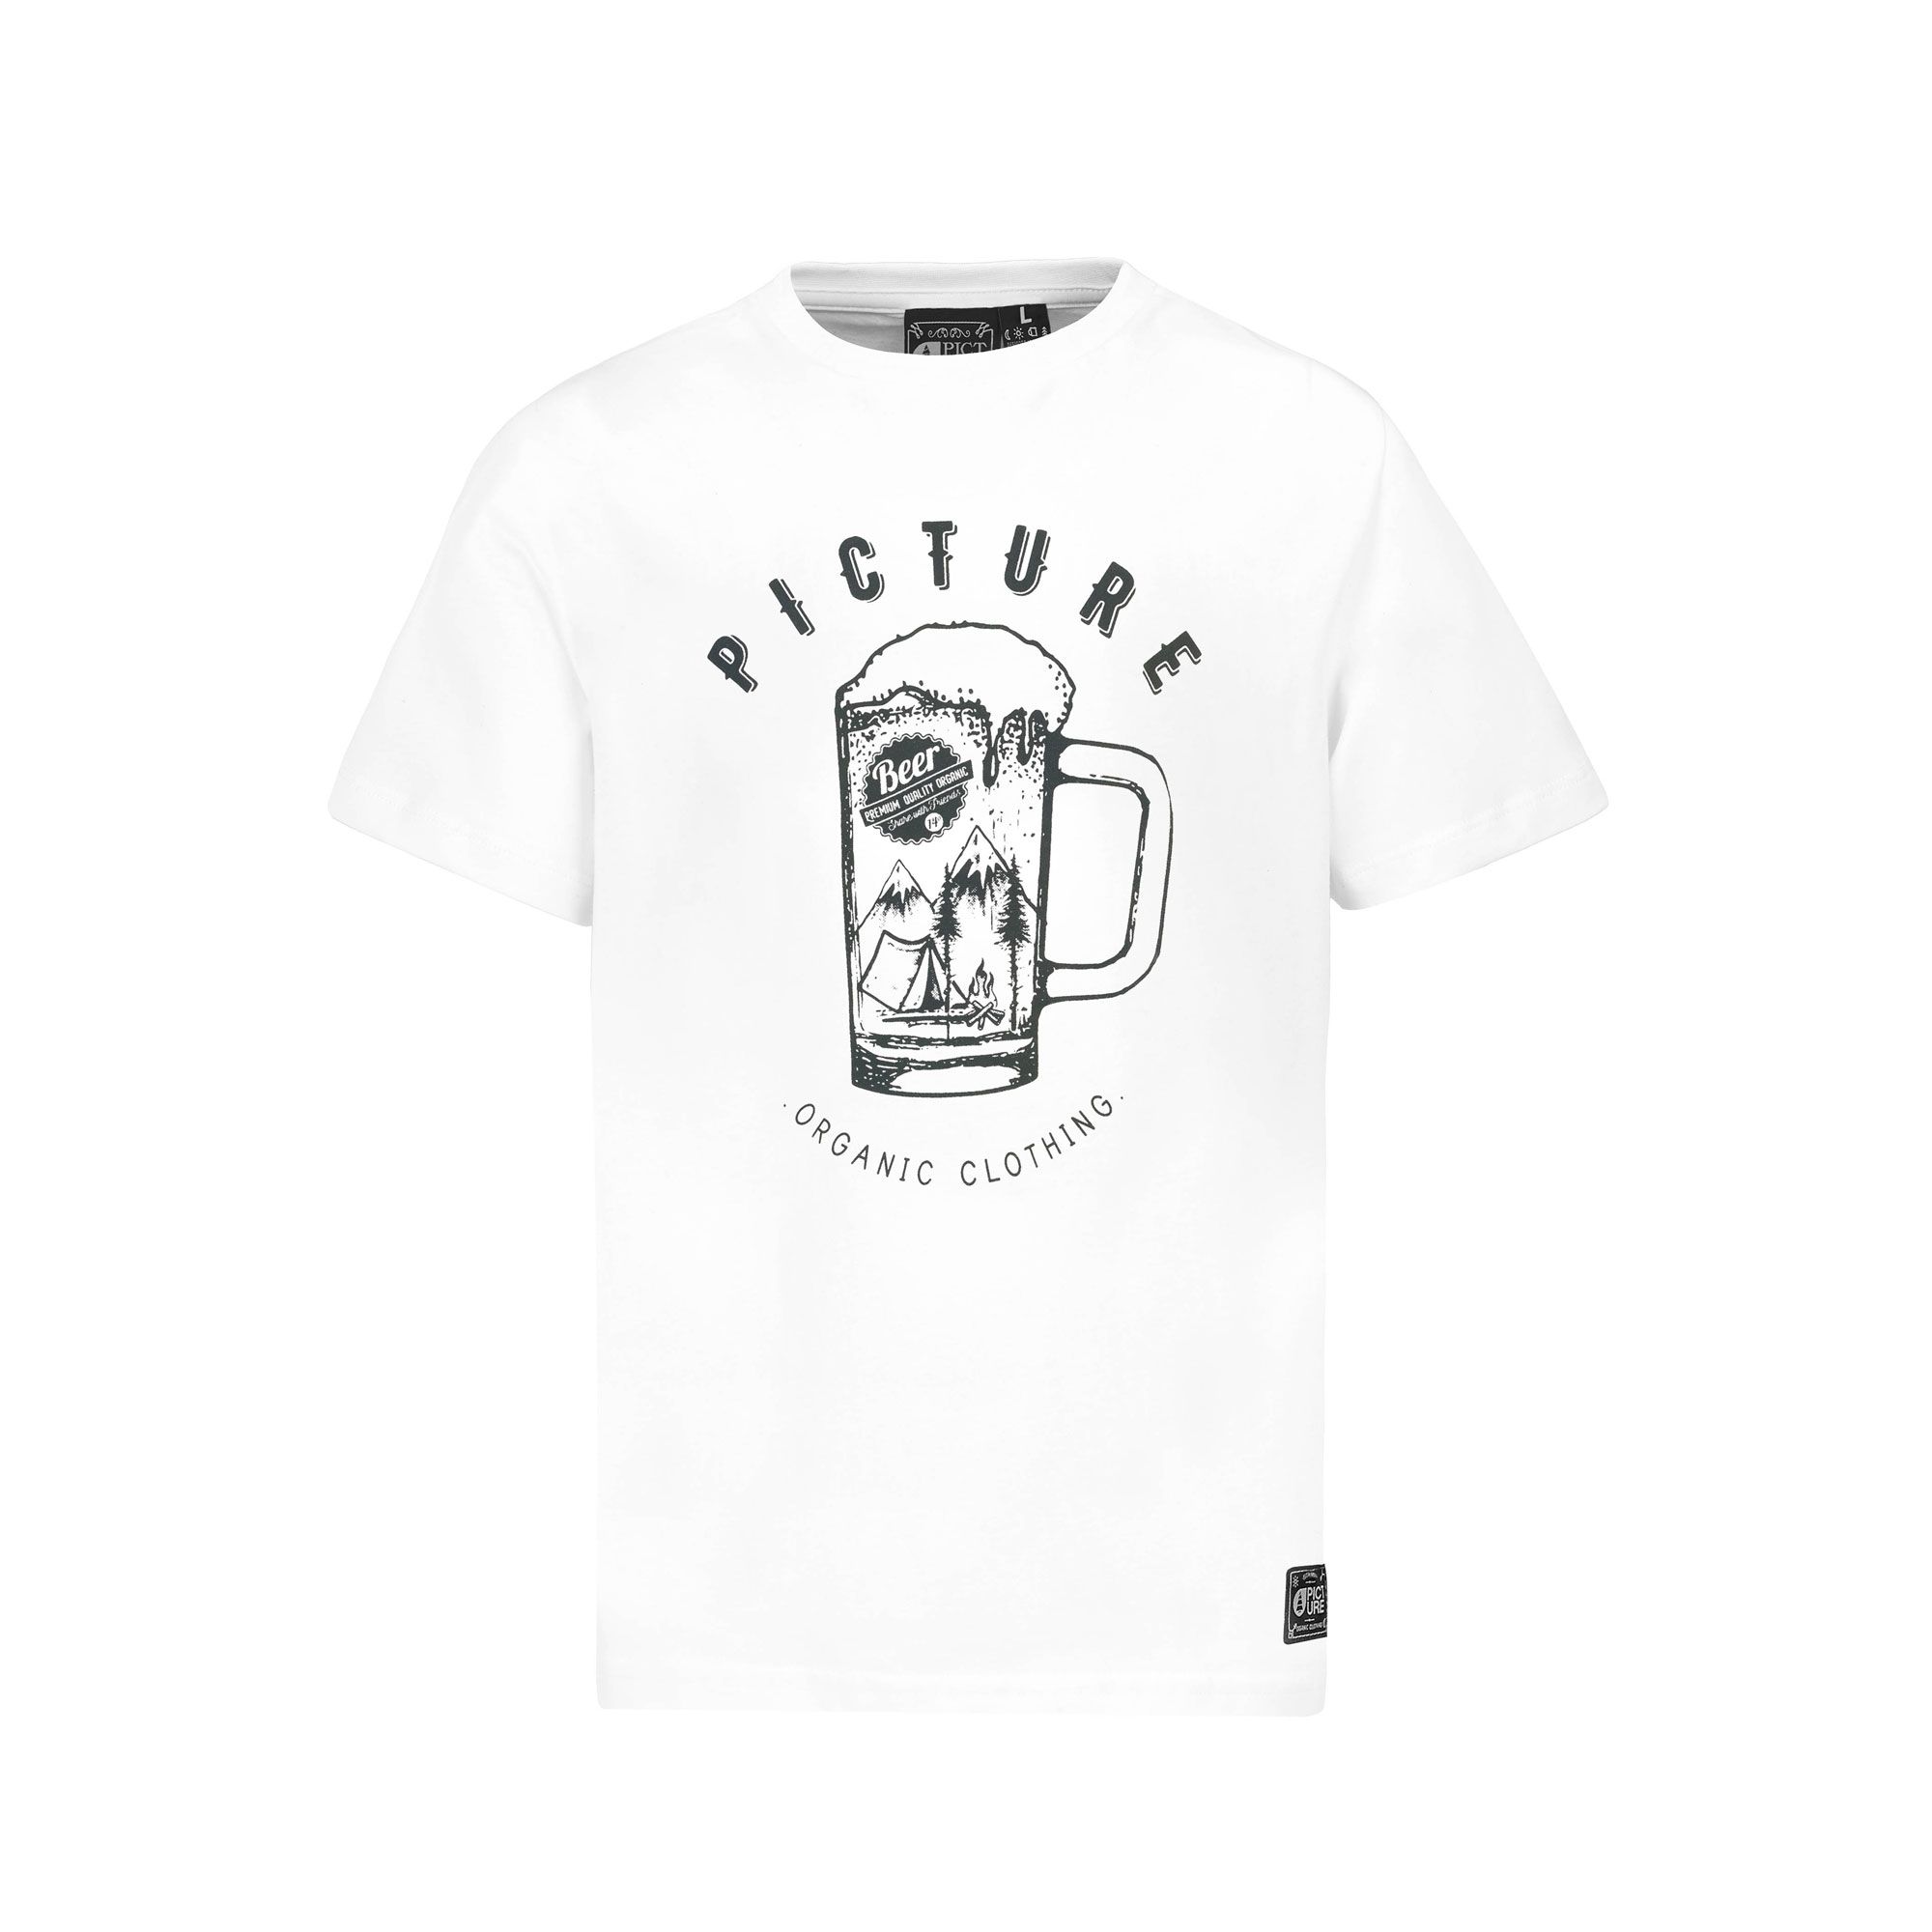 Tee Shirt Beer - White